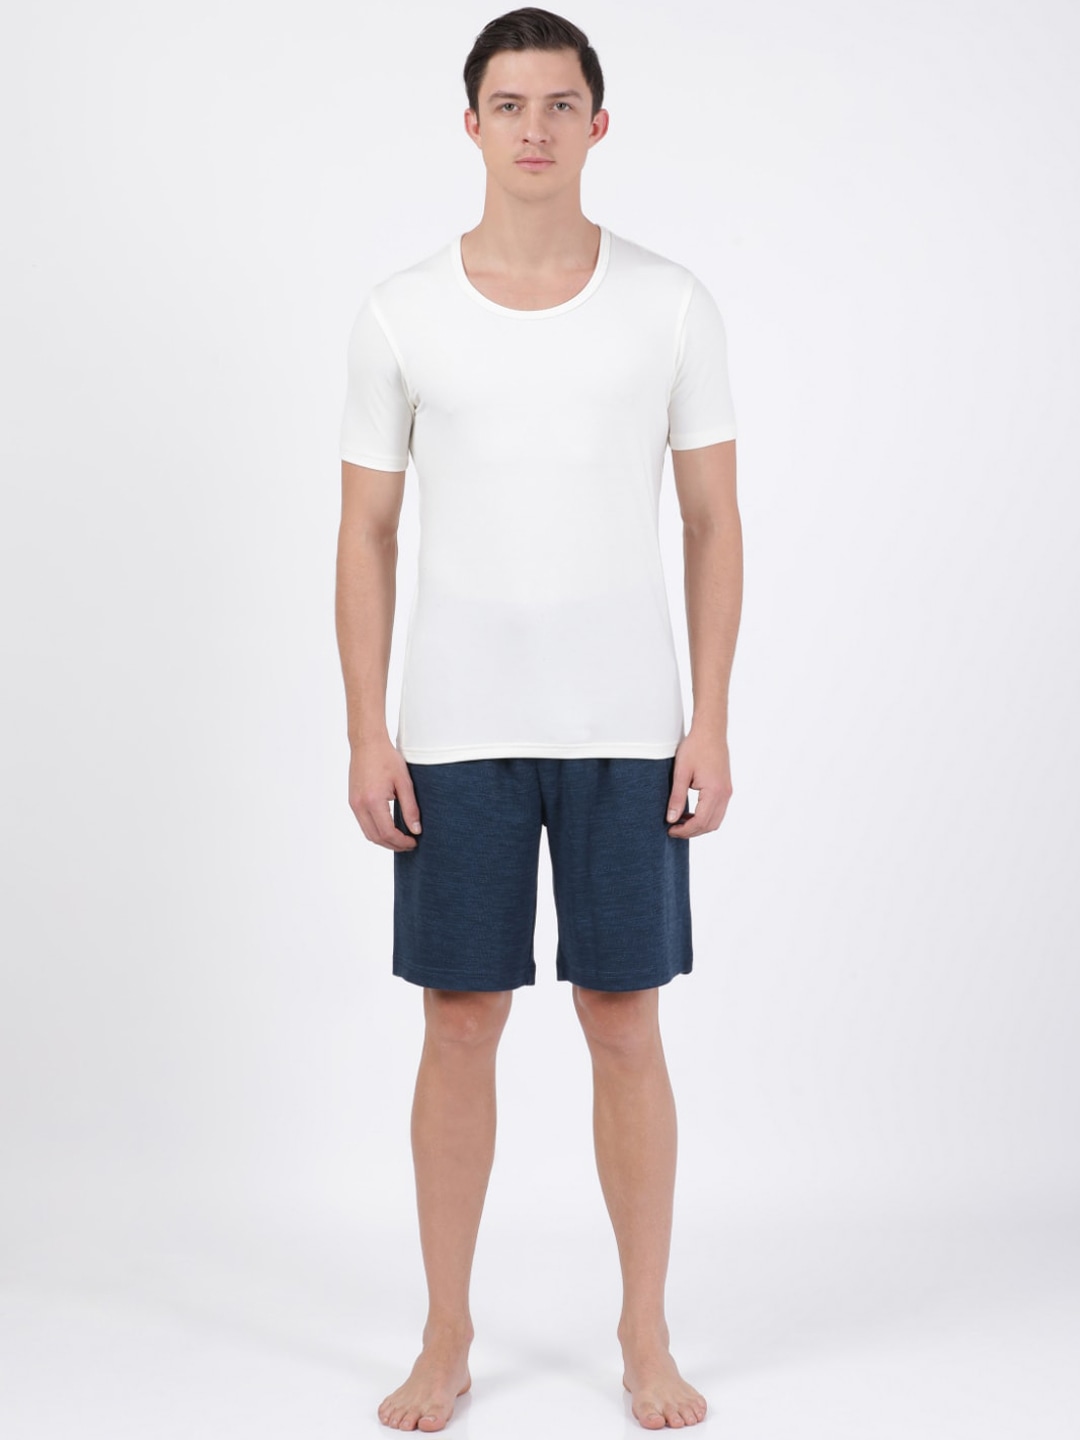 Clothing Innerwear Vests | Jockey Men White Solid Innerwear Vests - FF54685